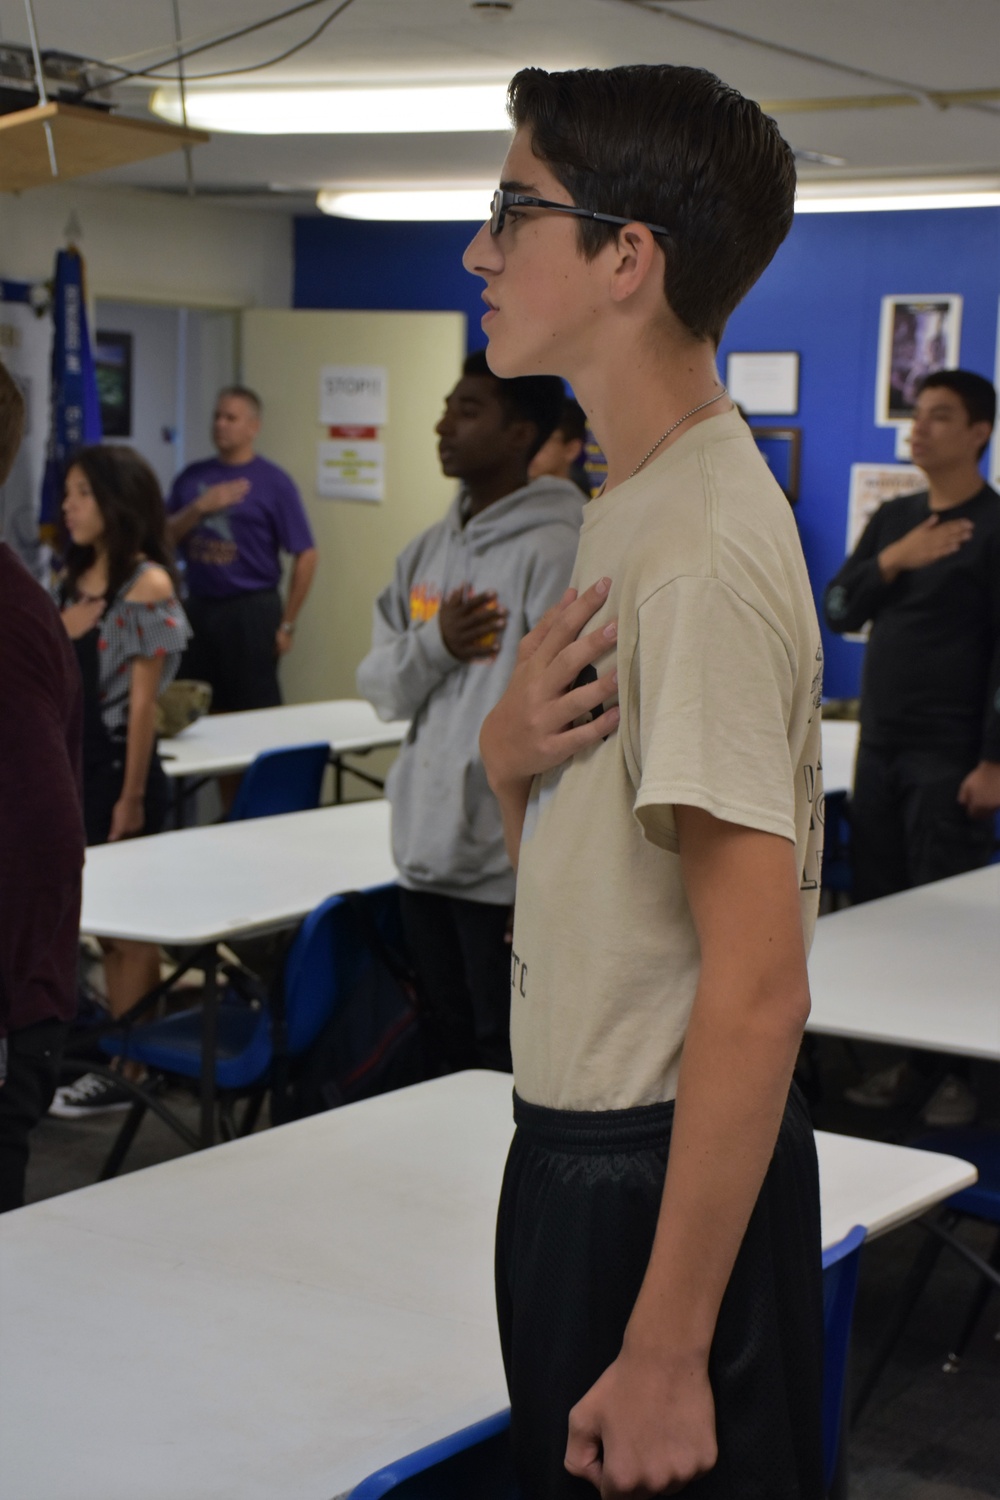 Army Rangers, Marksmanship Unit brief Mesa JROTC students